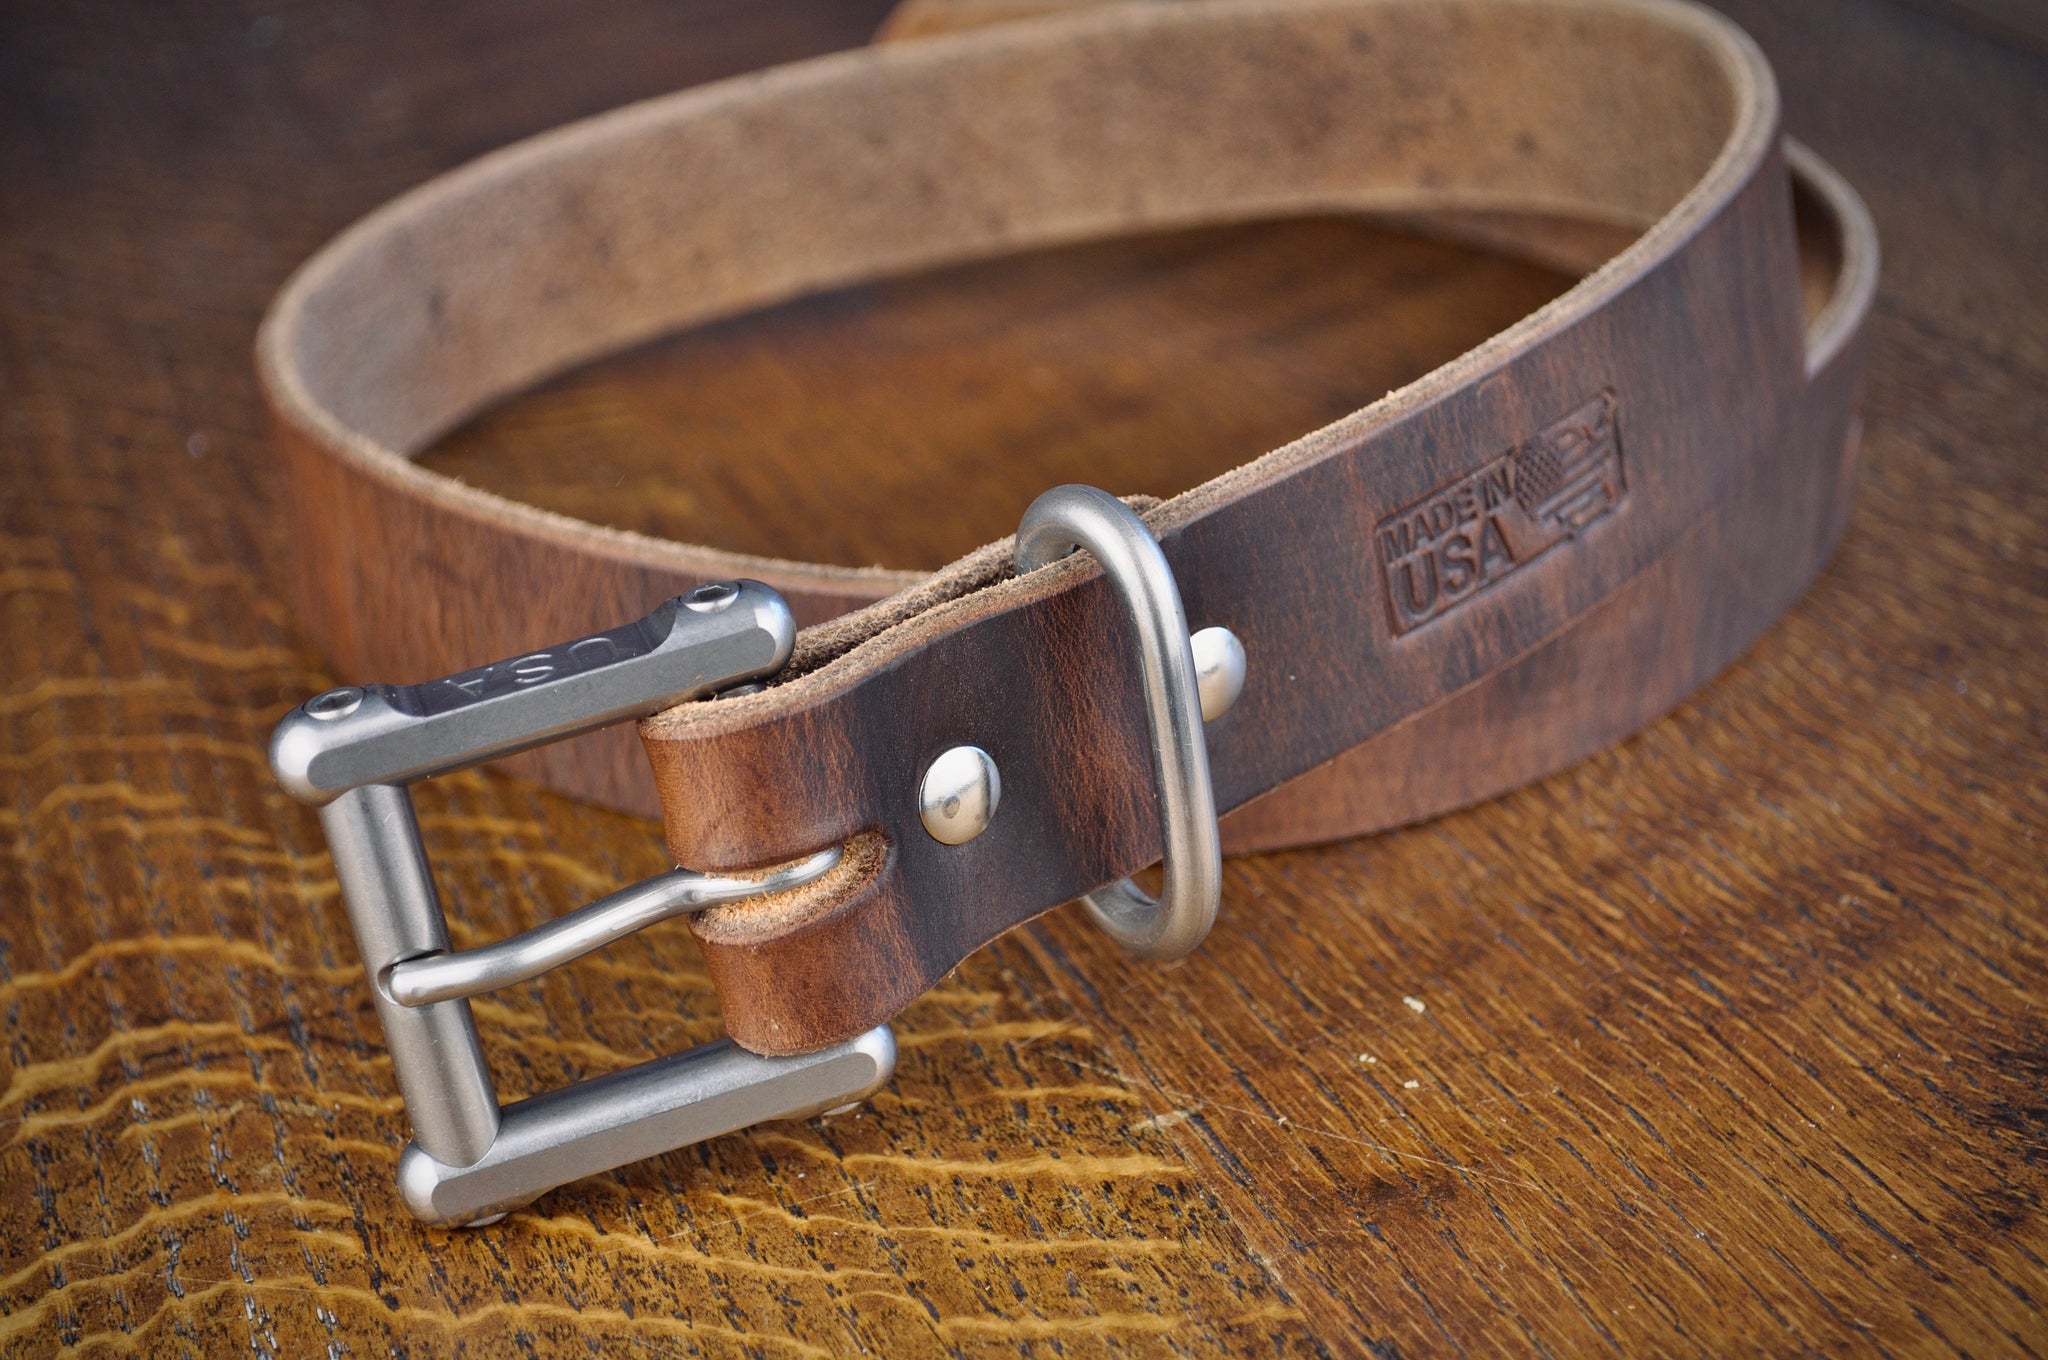 The rust belt isn't as rusty as the cotton belt.